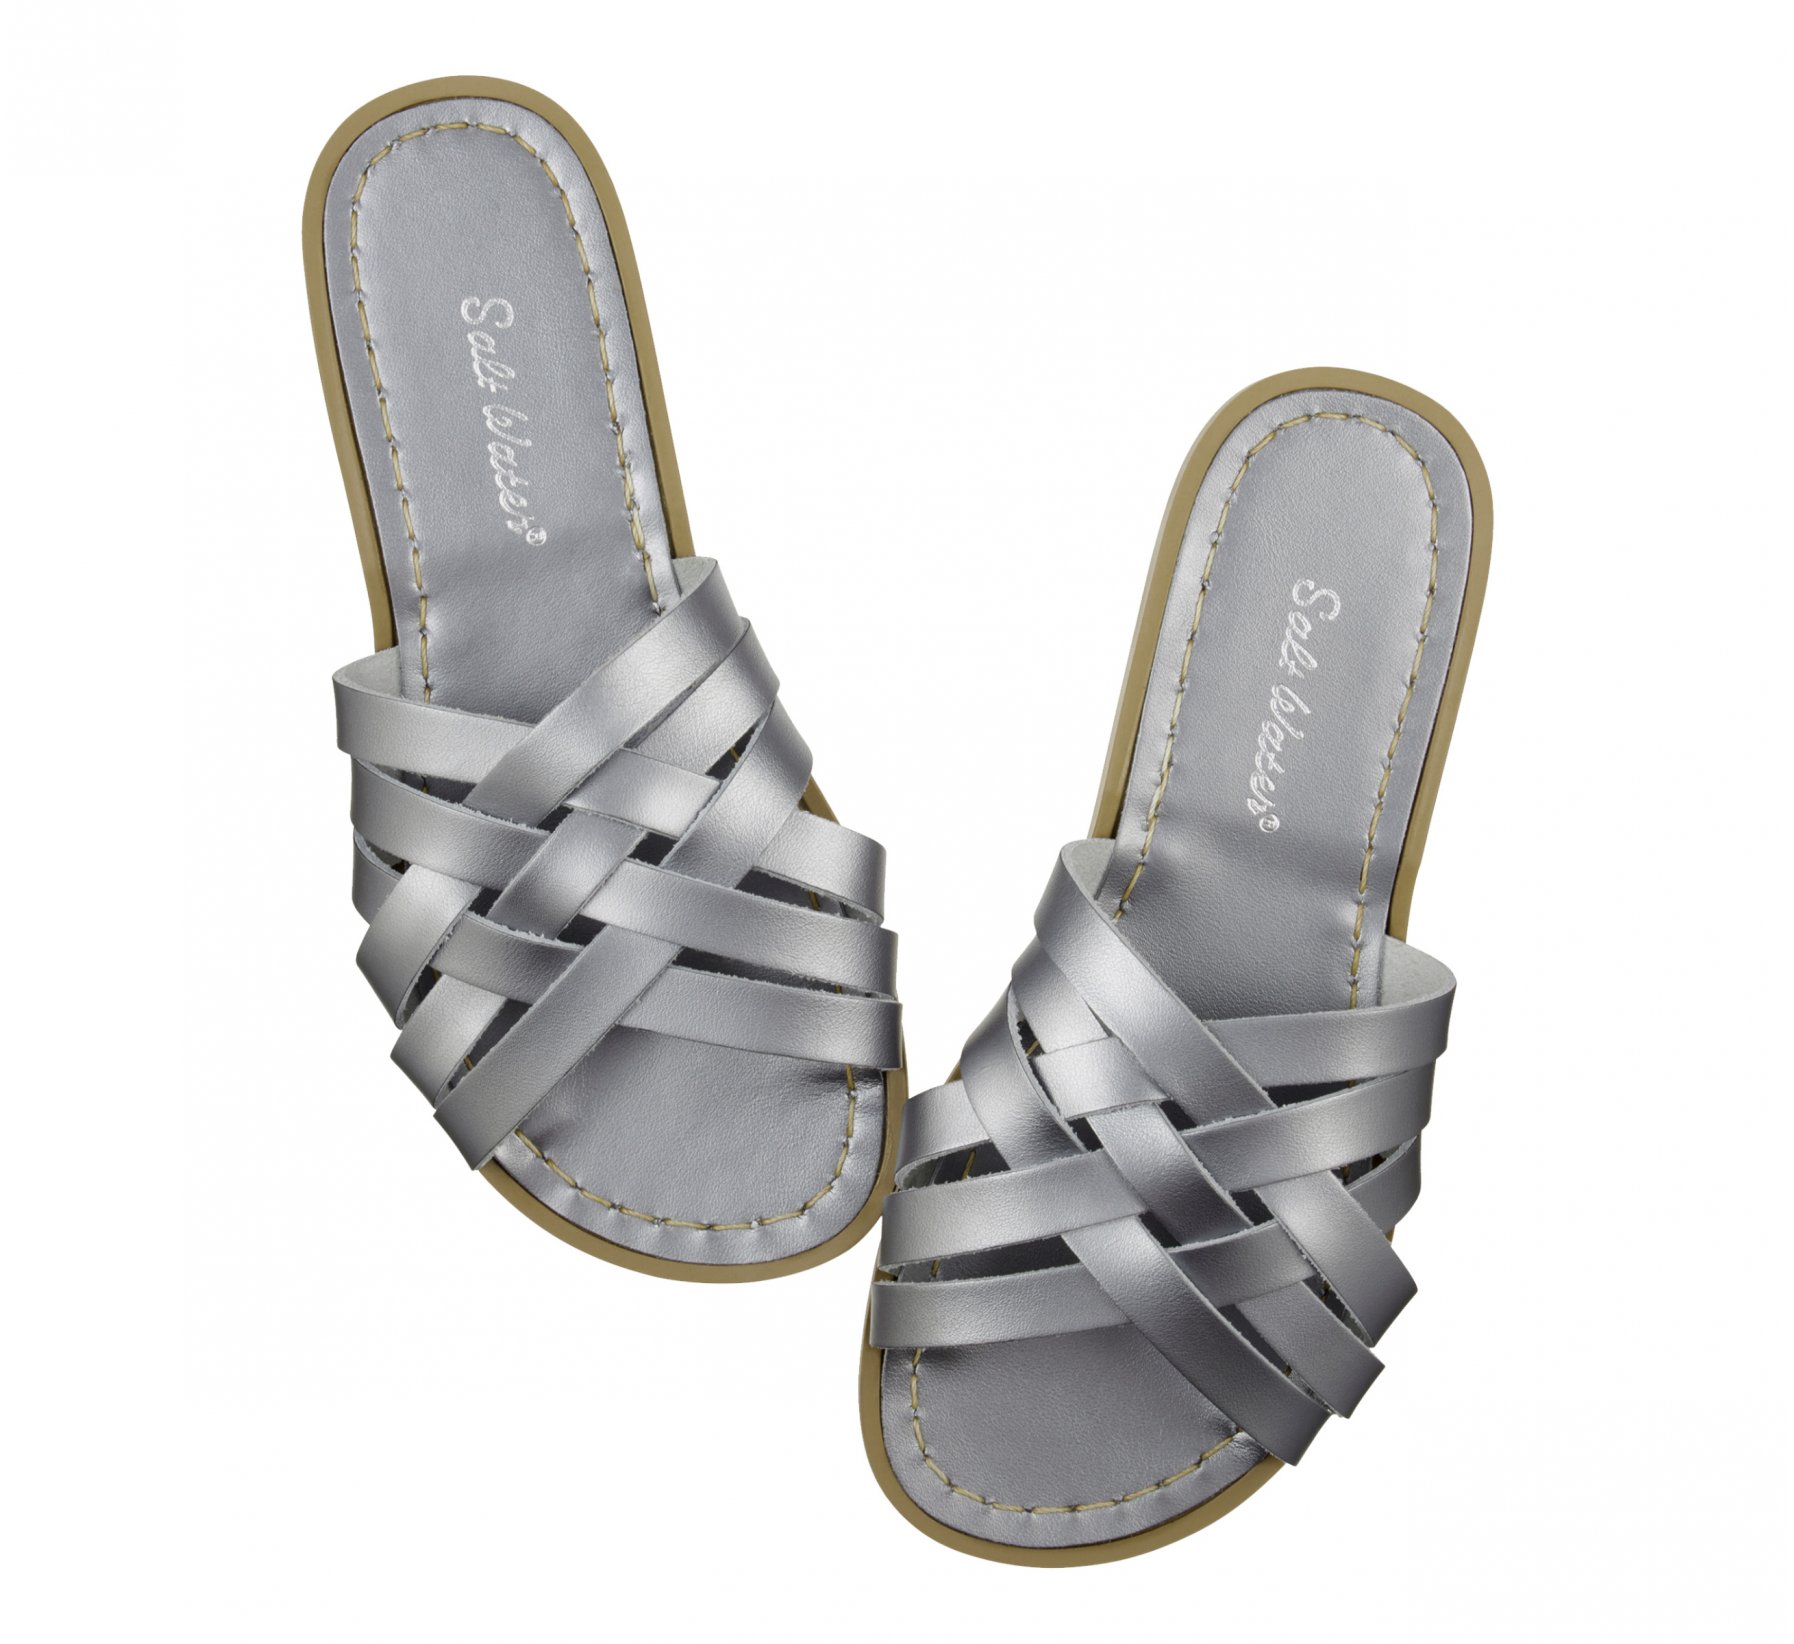 Retro Slide in Zinn - Salt Water Sandals